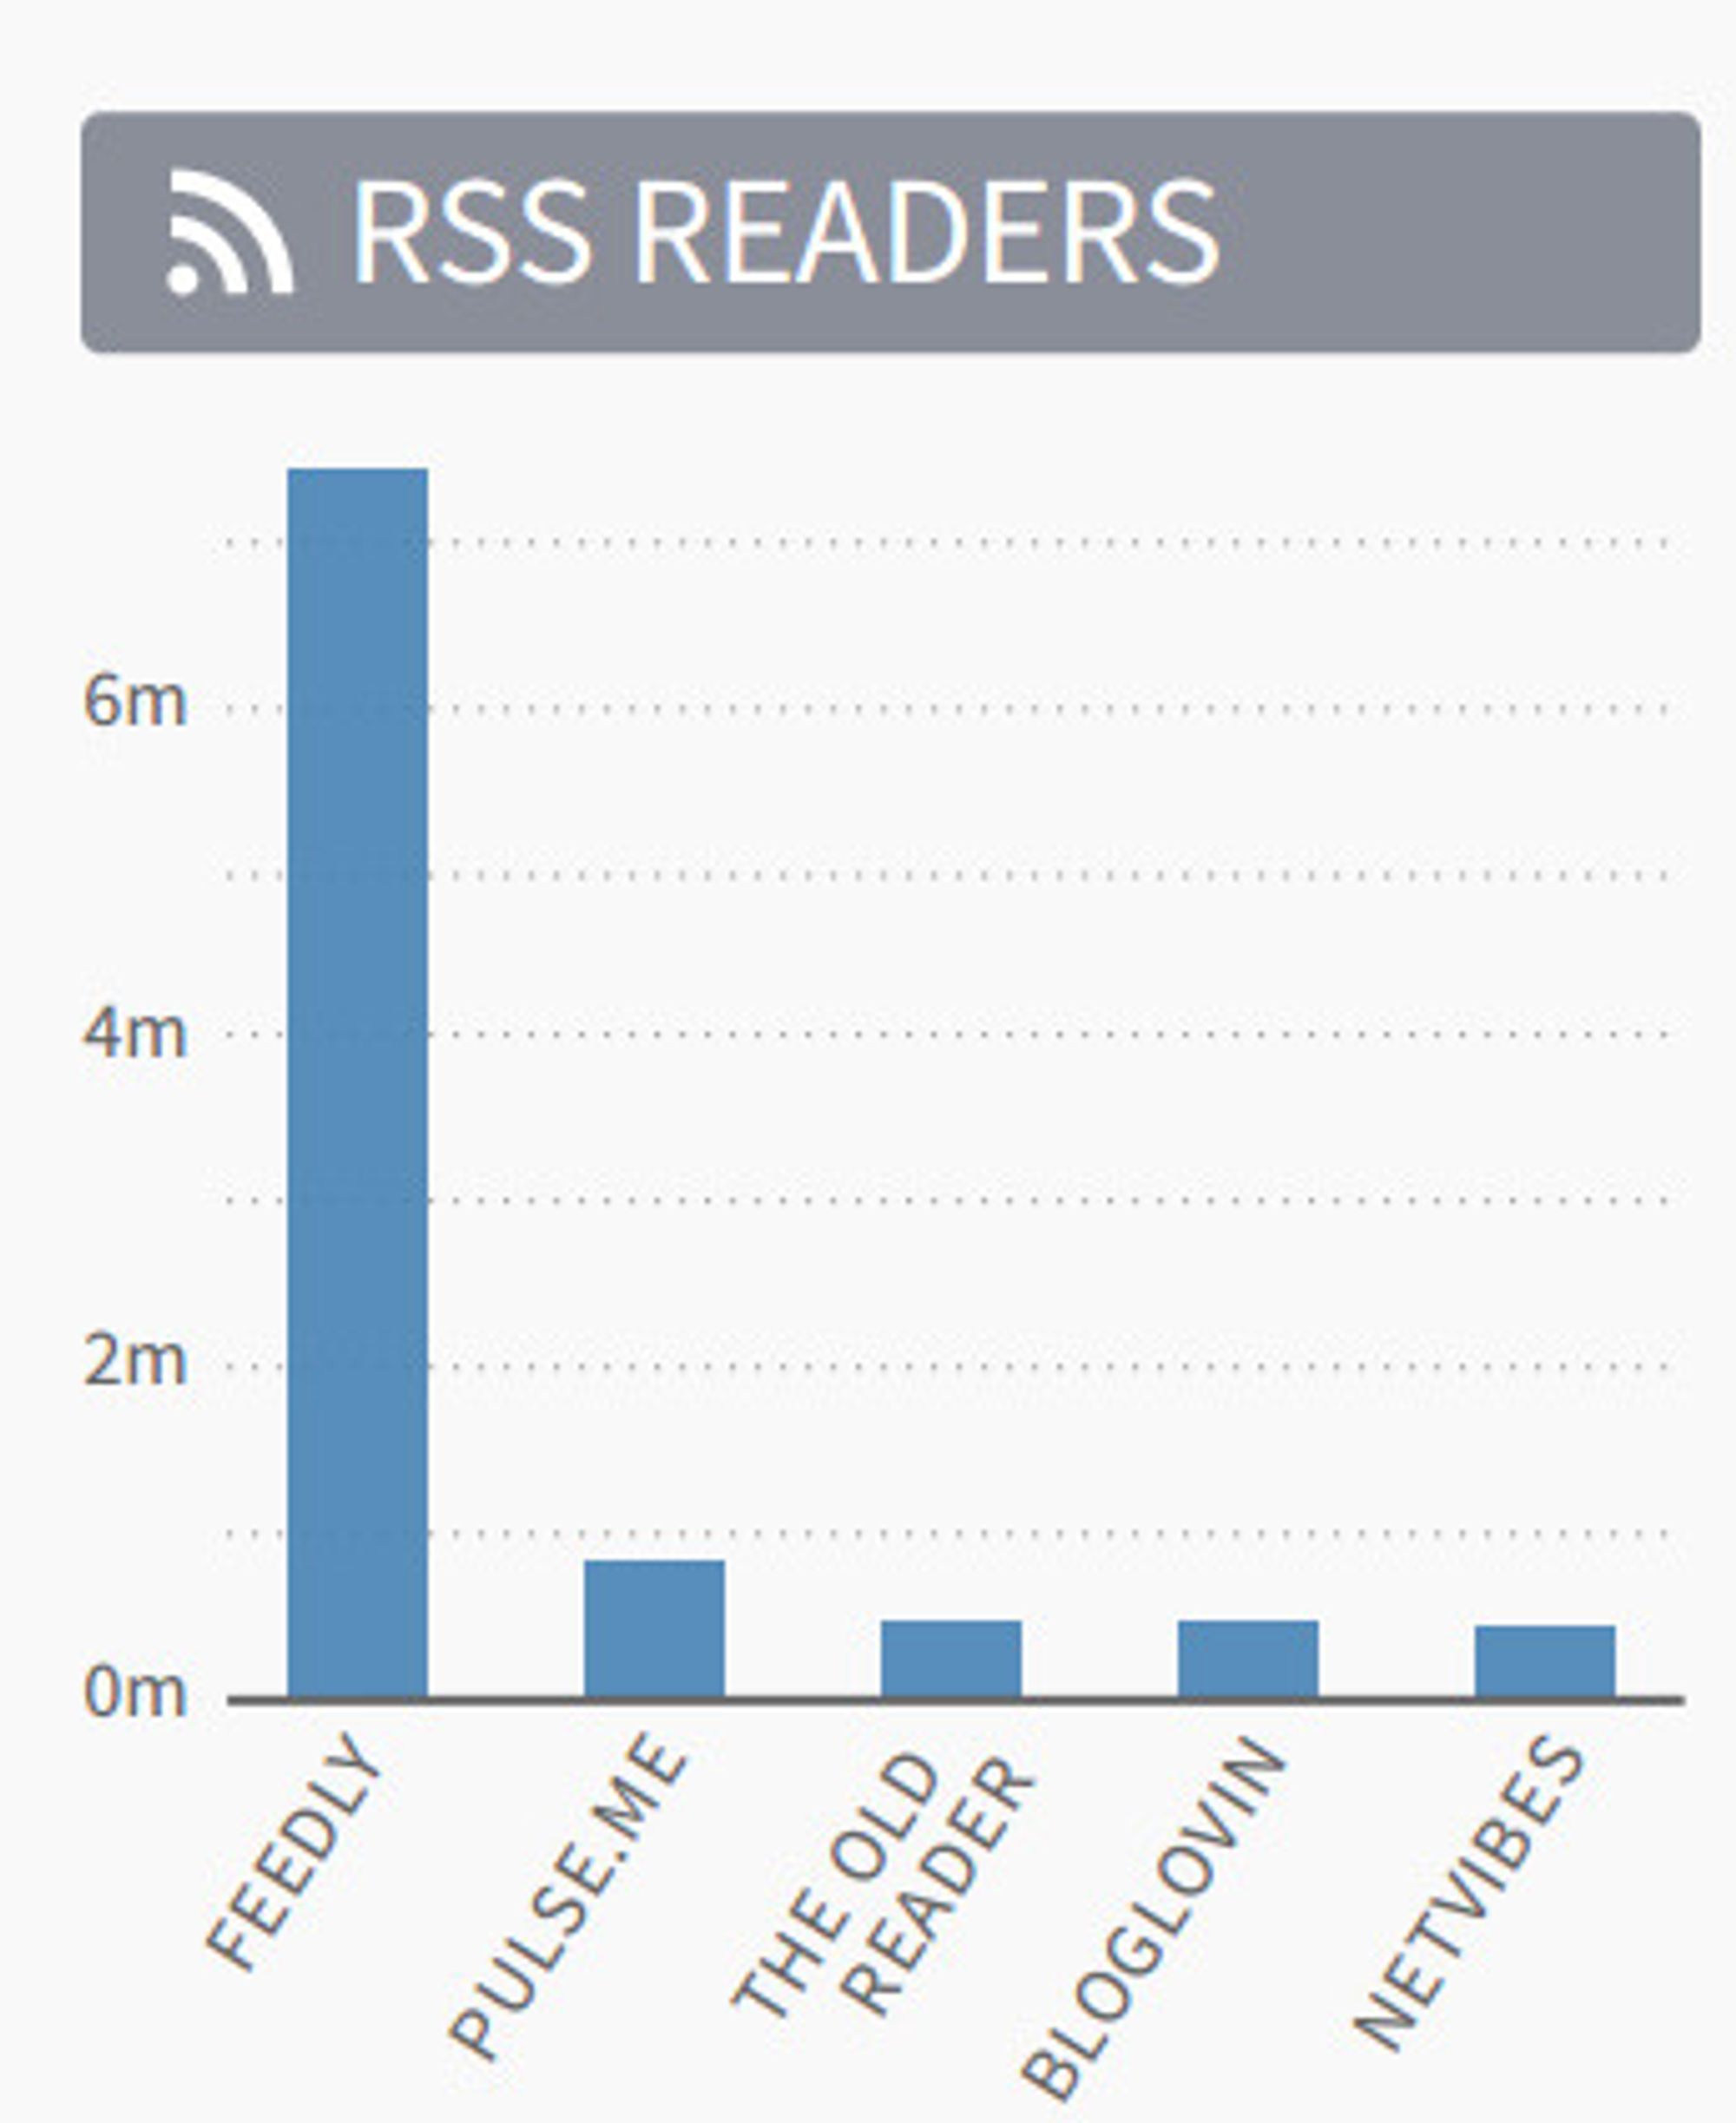 De mest trafikkskapende RSS-leserne i juli 2013.